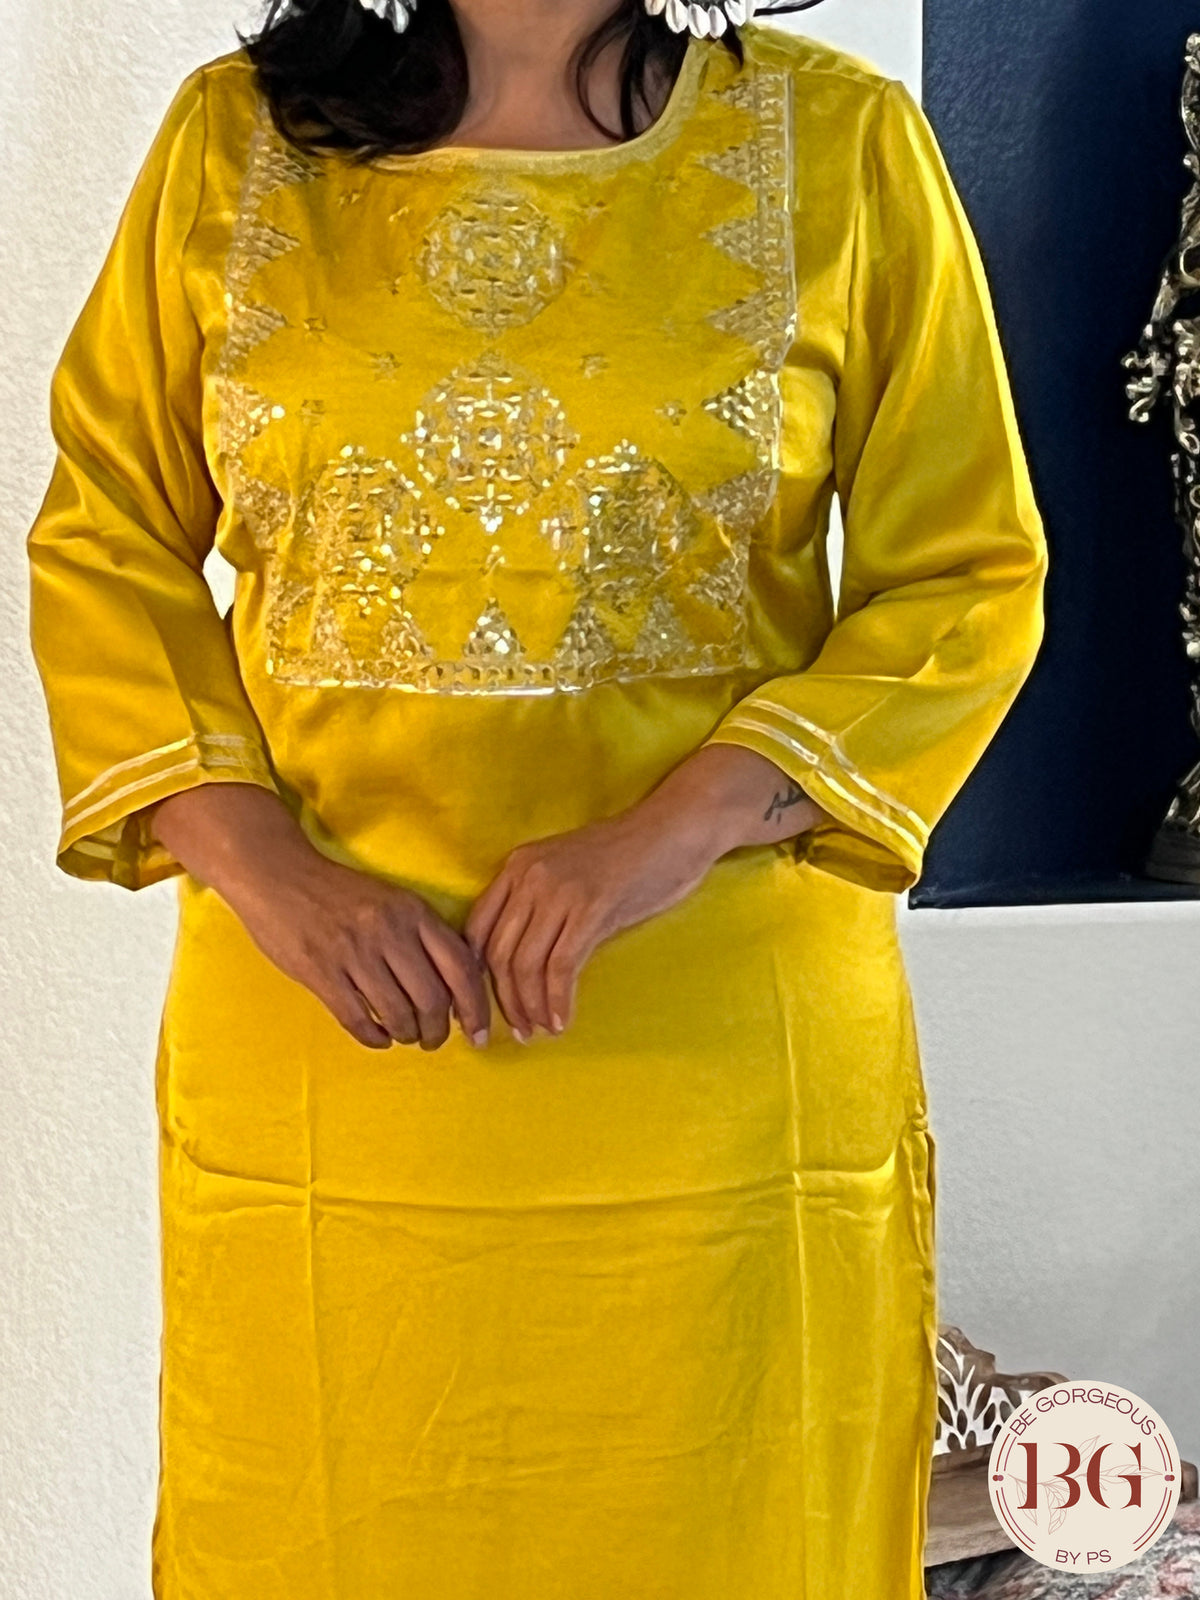 Muslin silk kurti with gota work in yellow/golden color